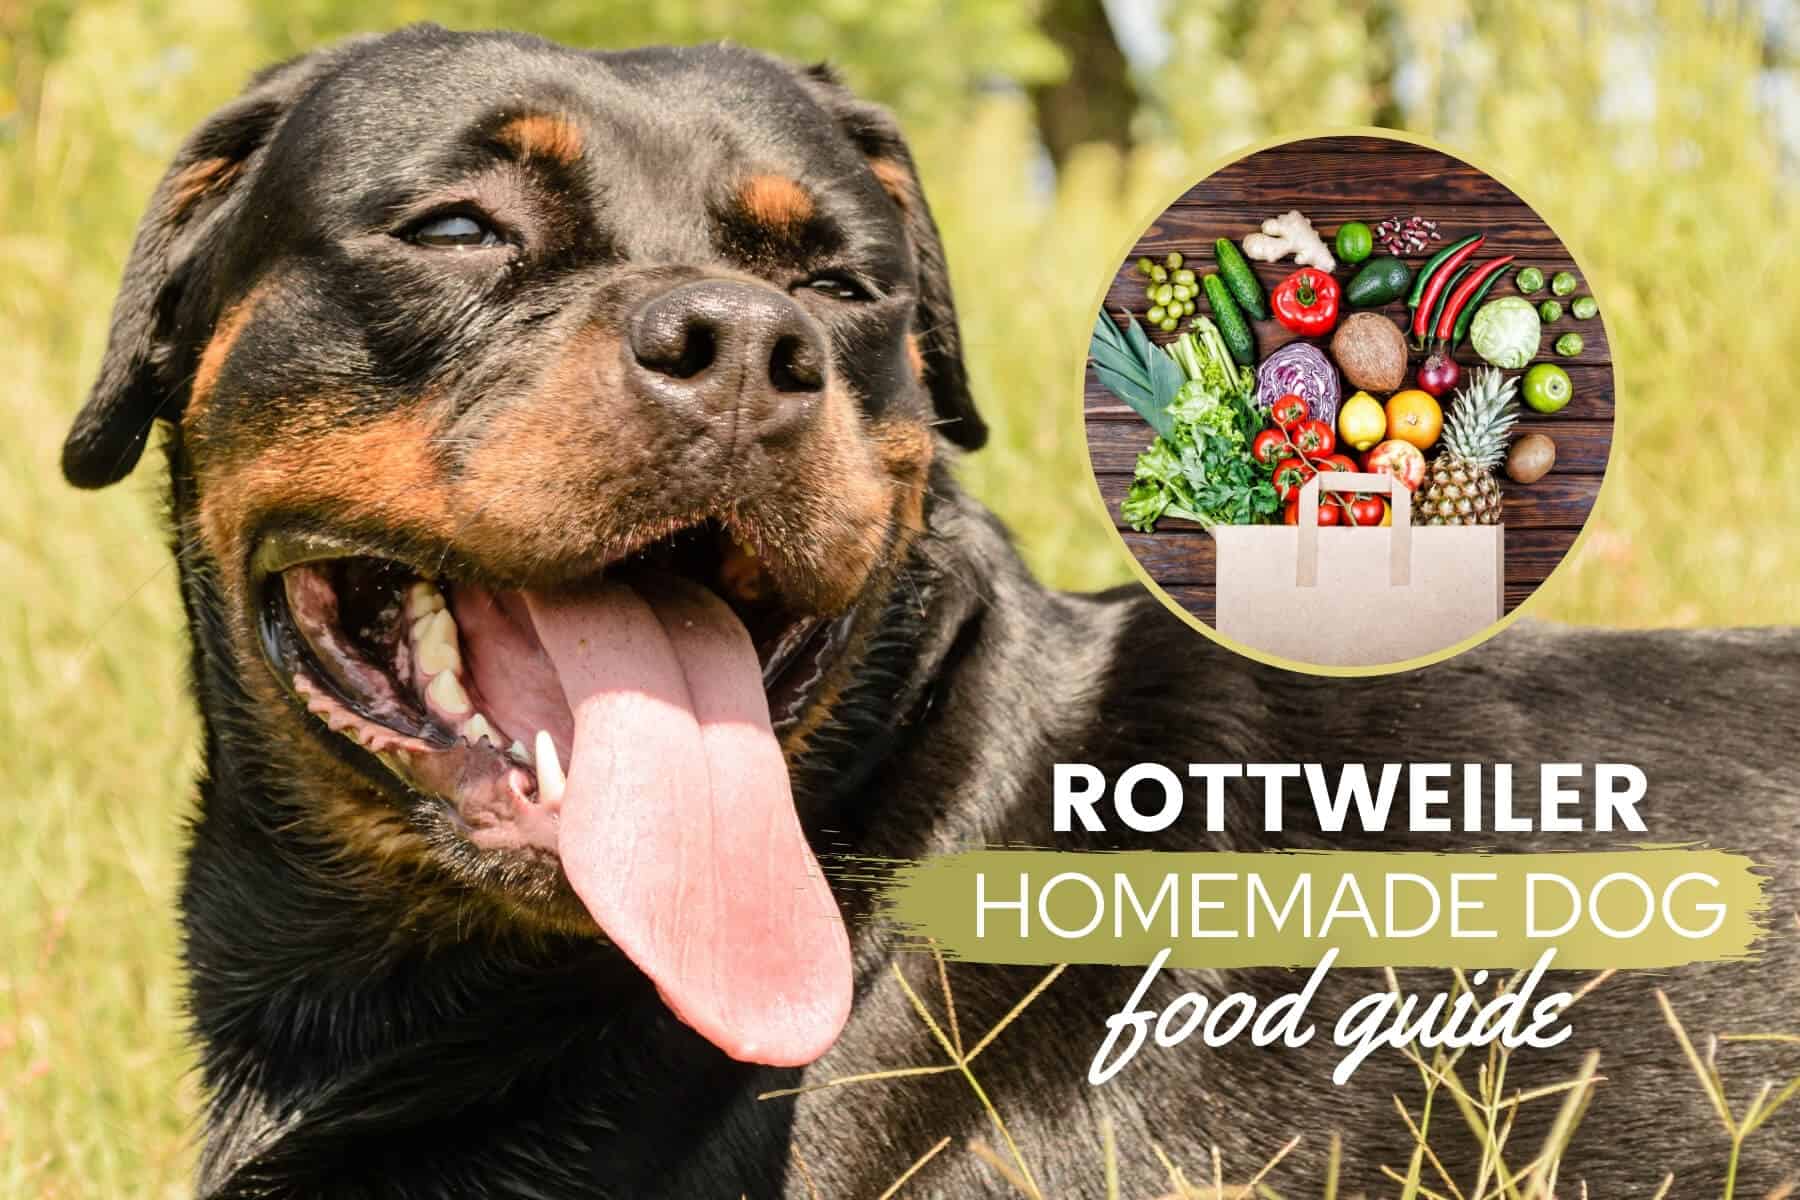 Rottweiler Homemade Dog Food Recipes, Nutrition & Tips